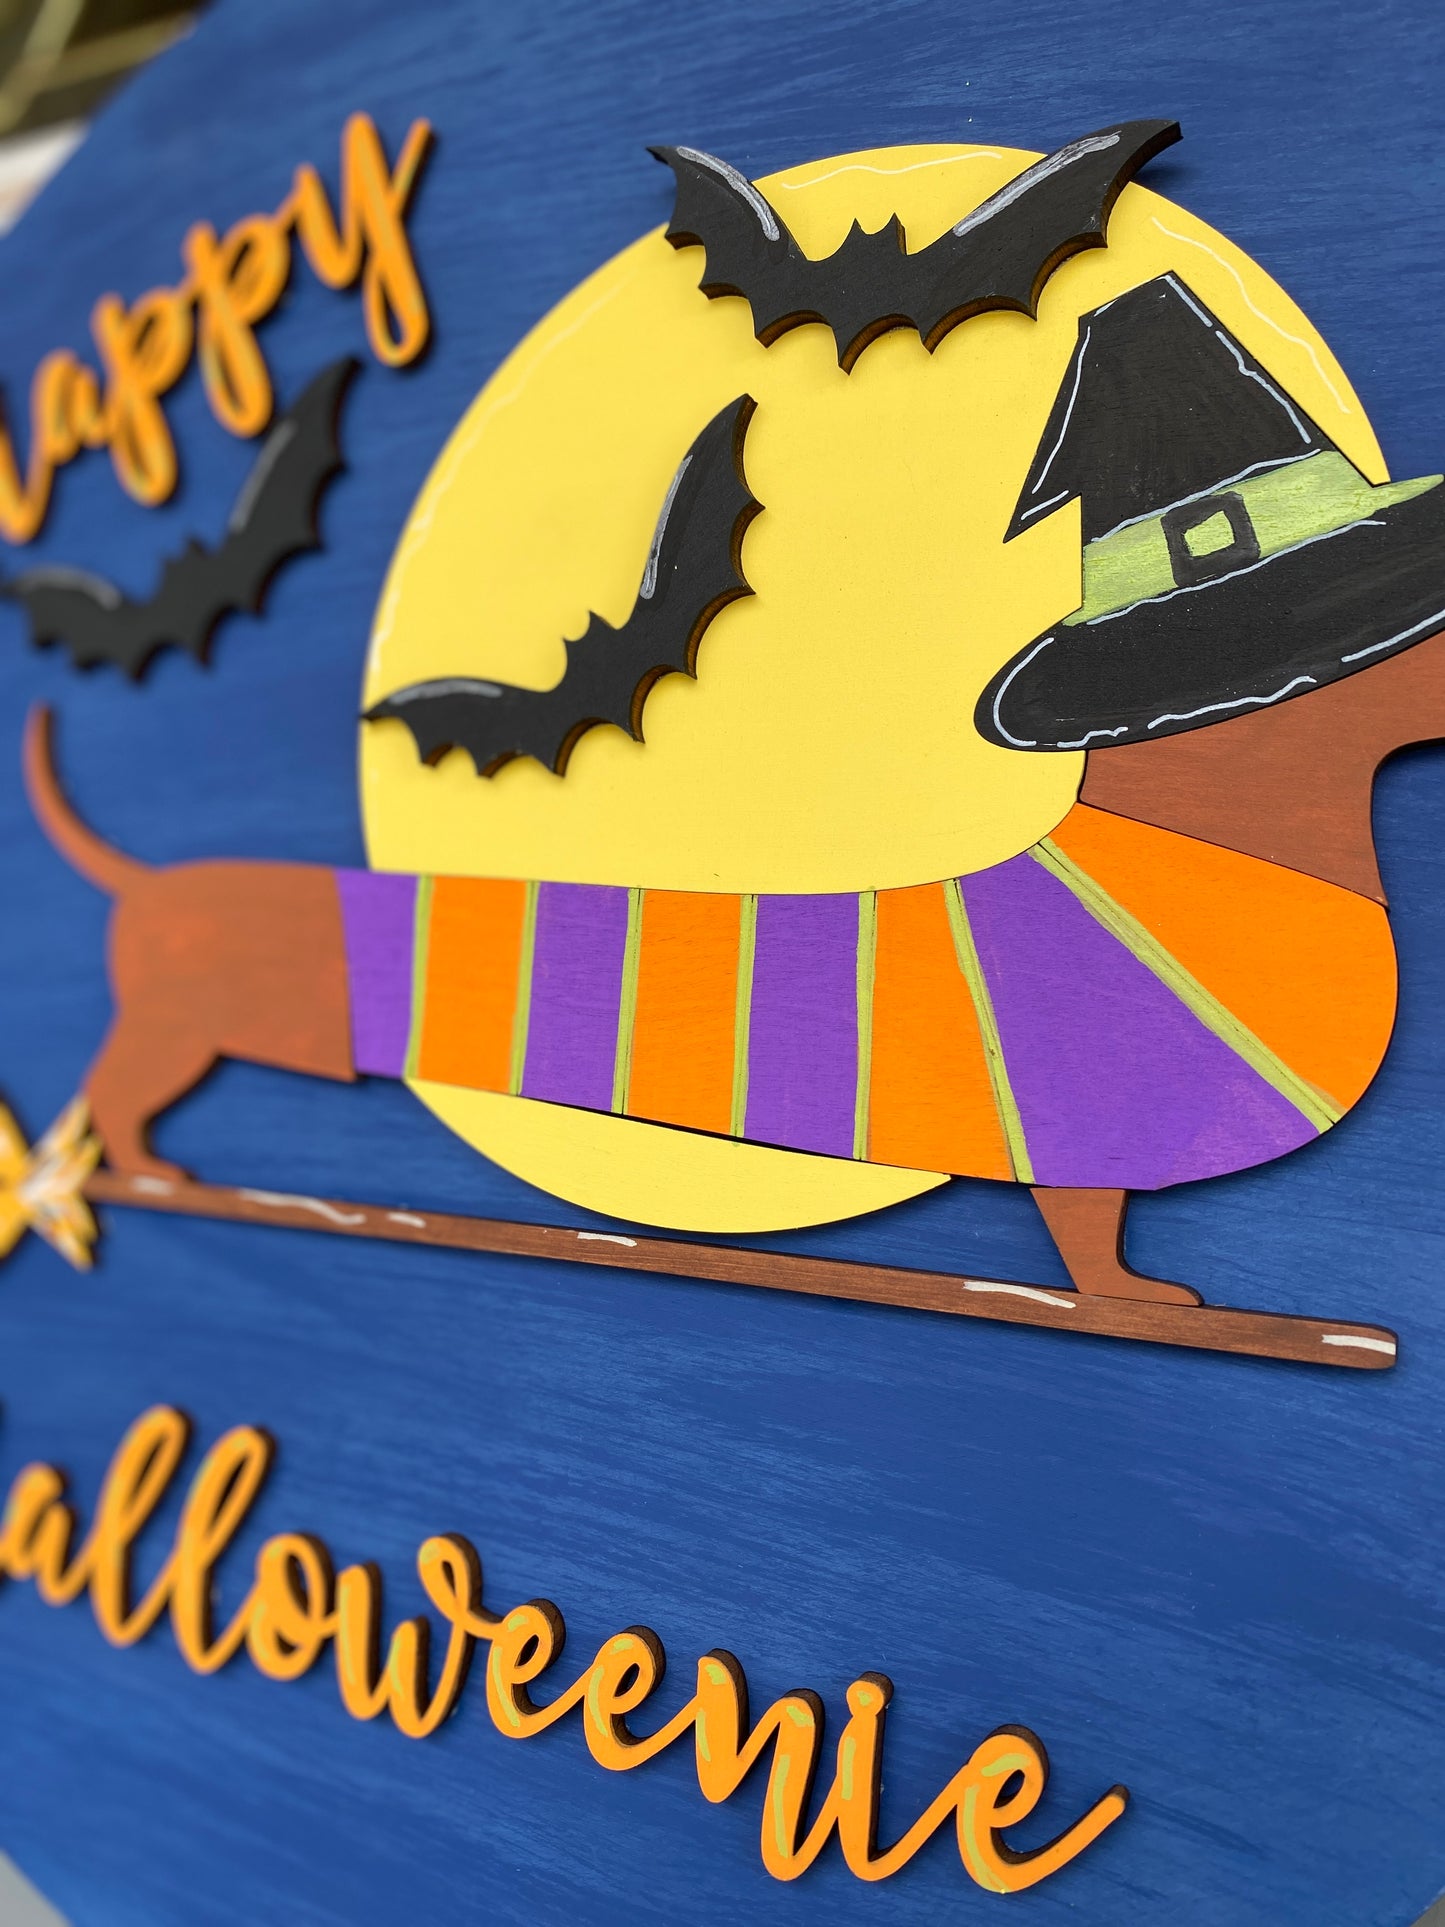 Happy Halloweenie Round Layered Sign / Laser Cut Door Hanger / Blanks for DIY Project